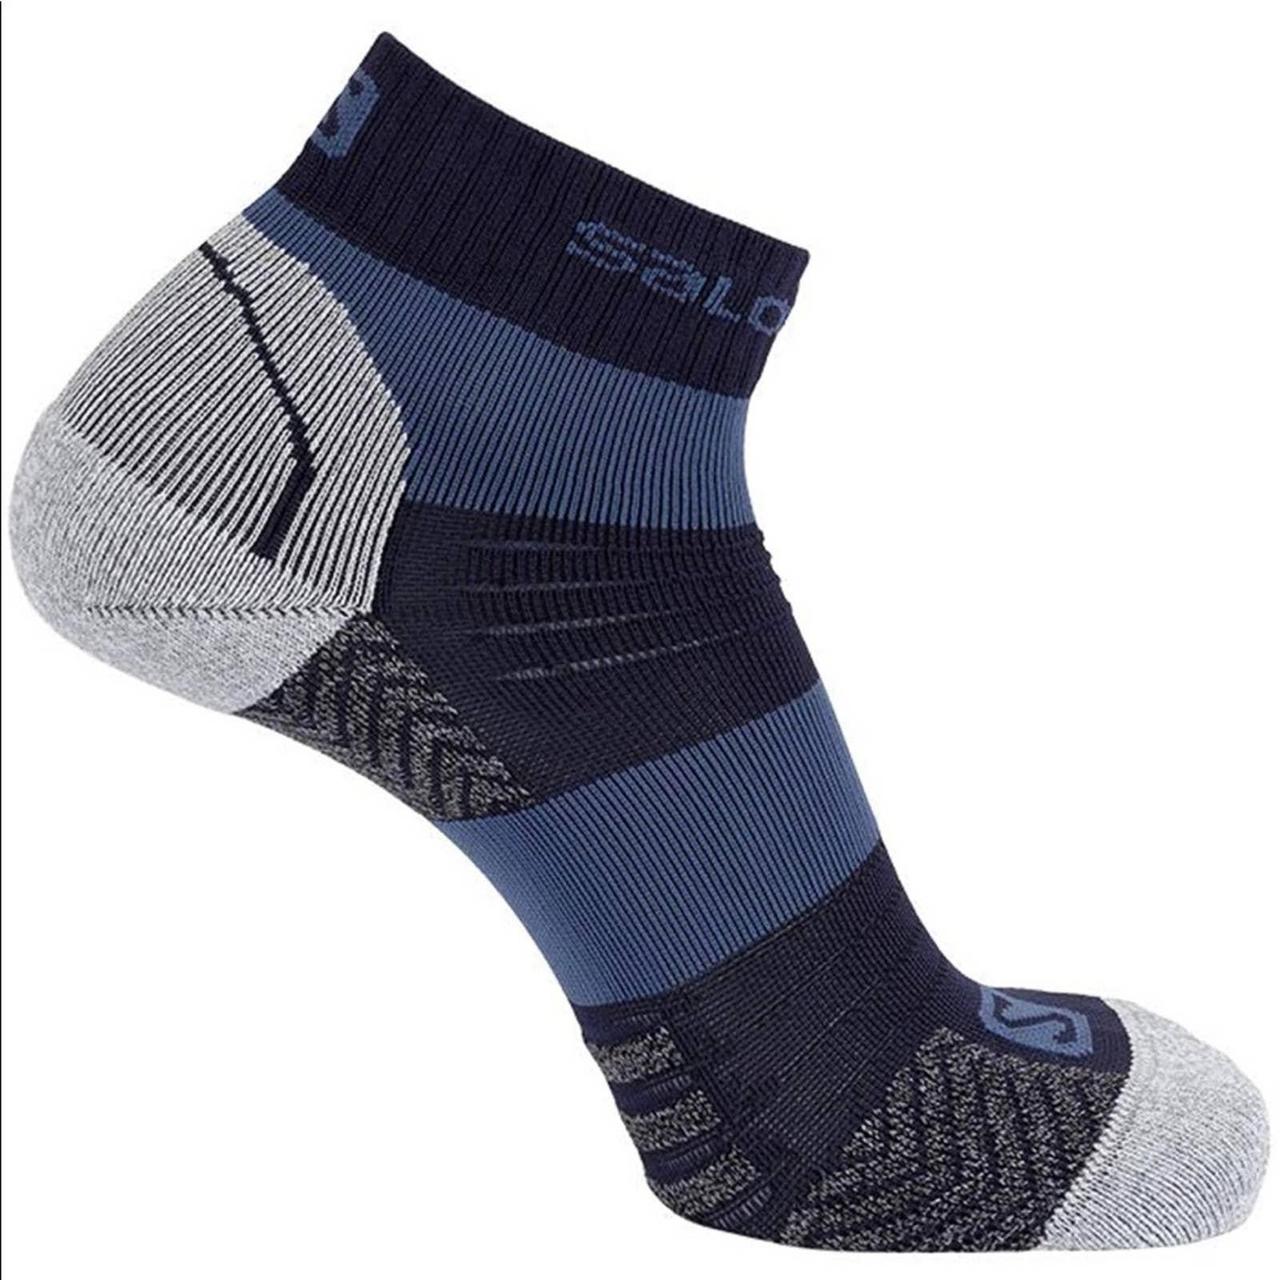 Product Image 1 - Salomon Standard Socks, Blue/Light Grey
Women's